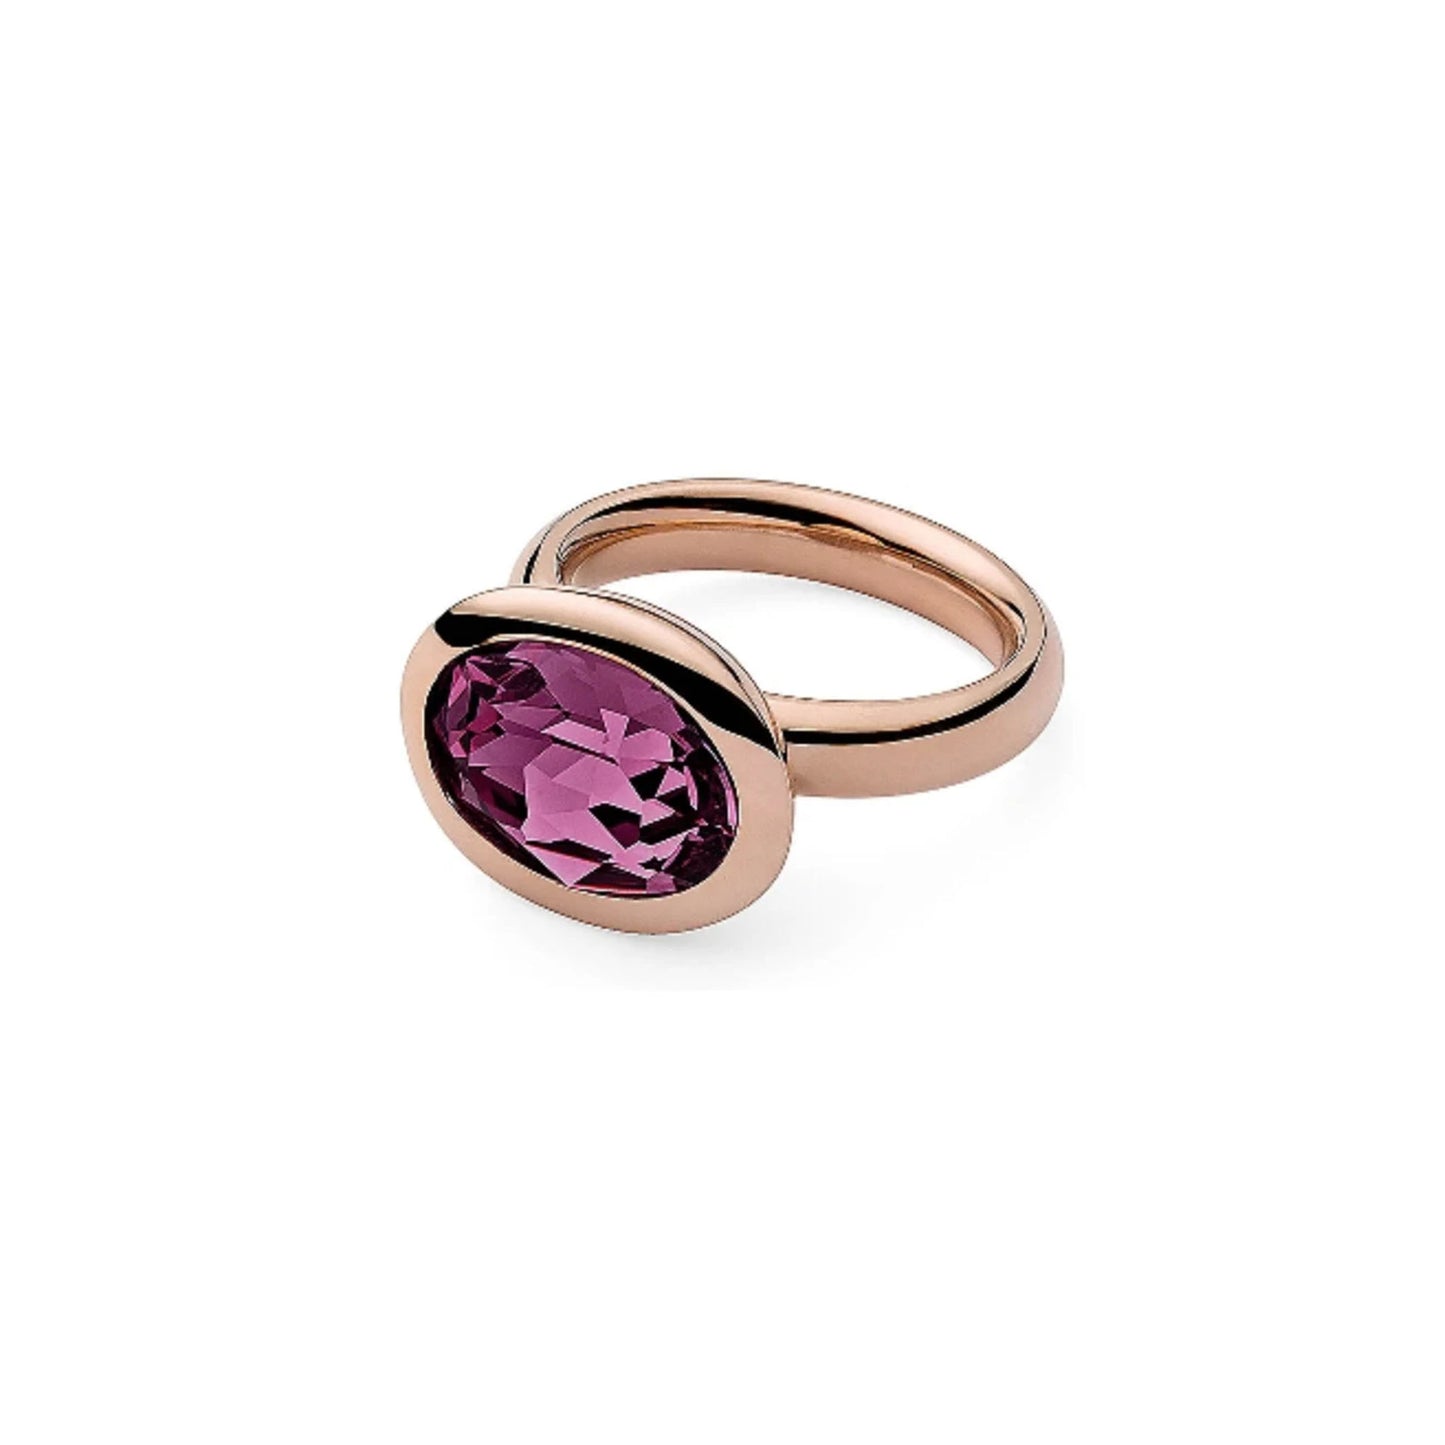 Tivola Ring in Rose Gold - Amethyst